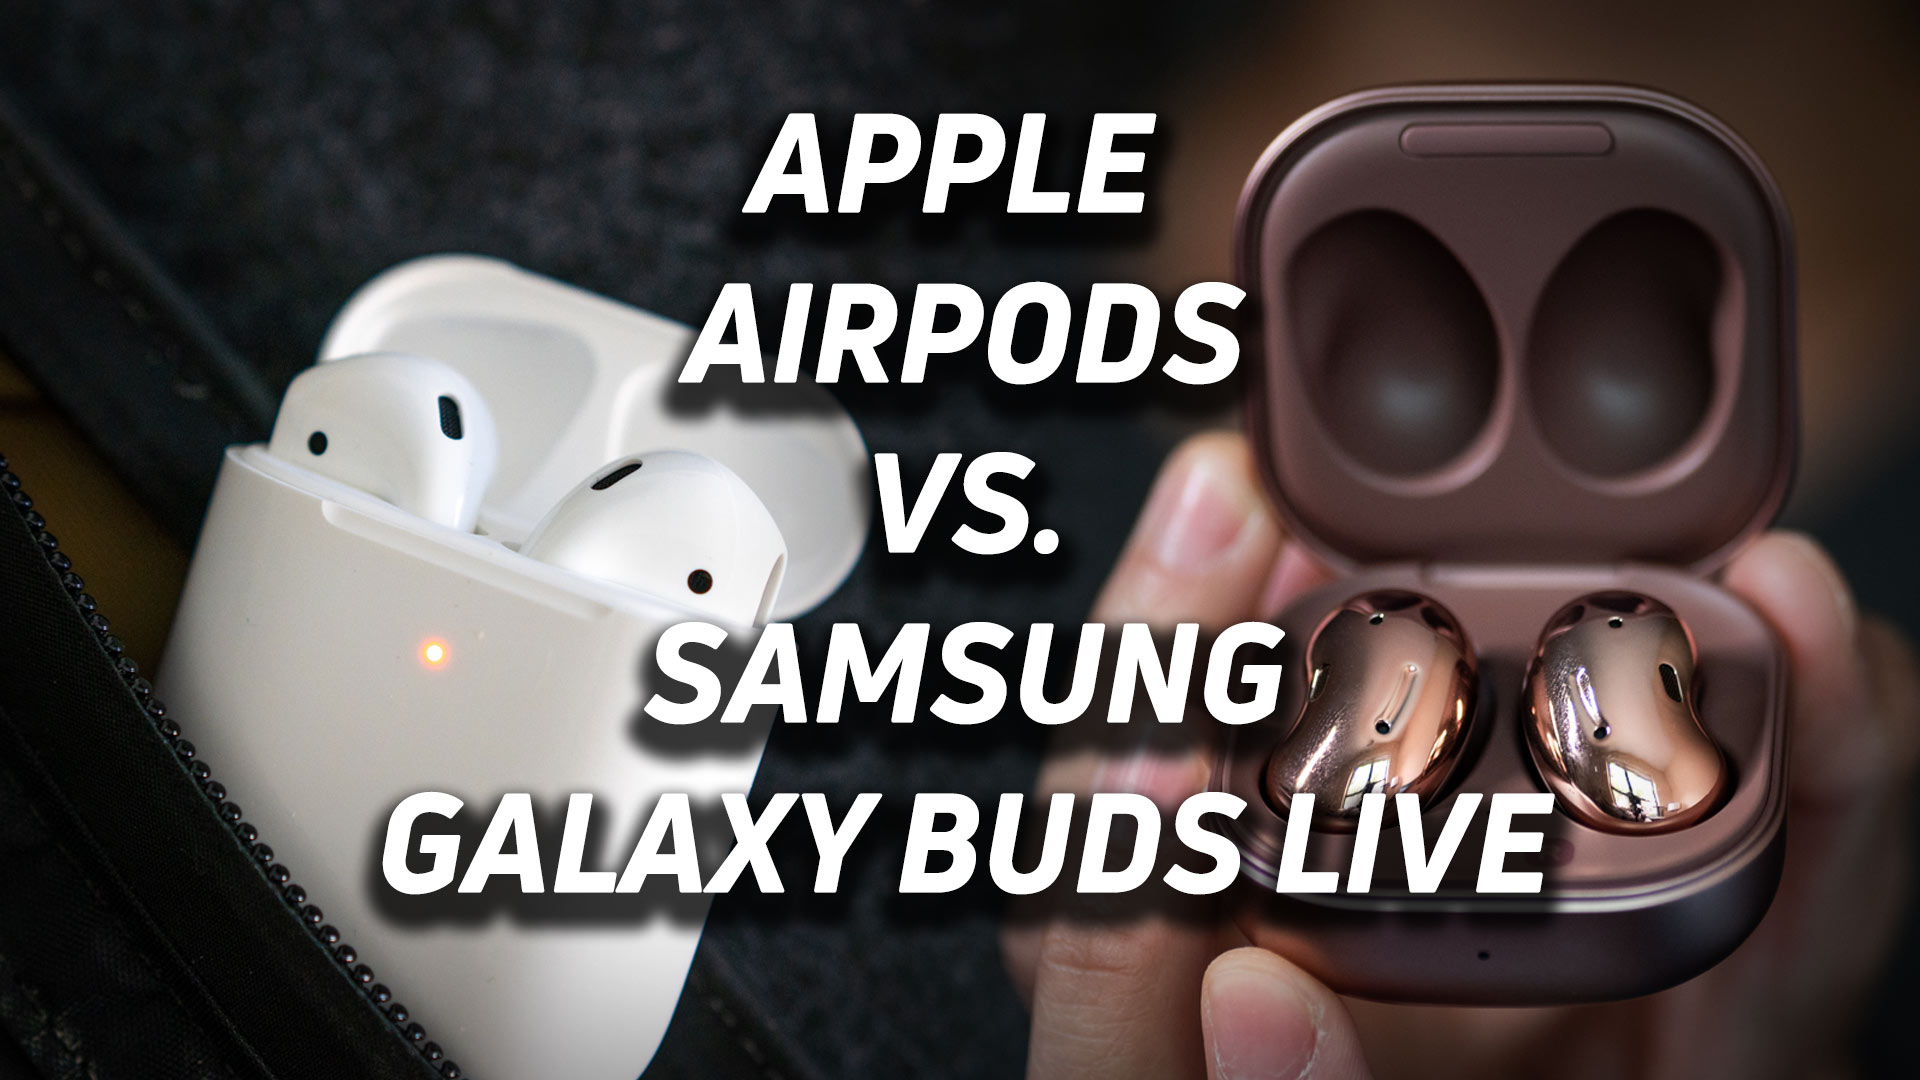 Apple AirPods vs Samsung Galaxy Buds Live - SoundGuys